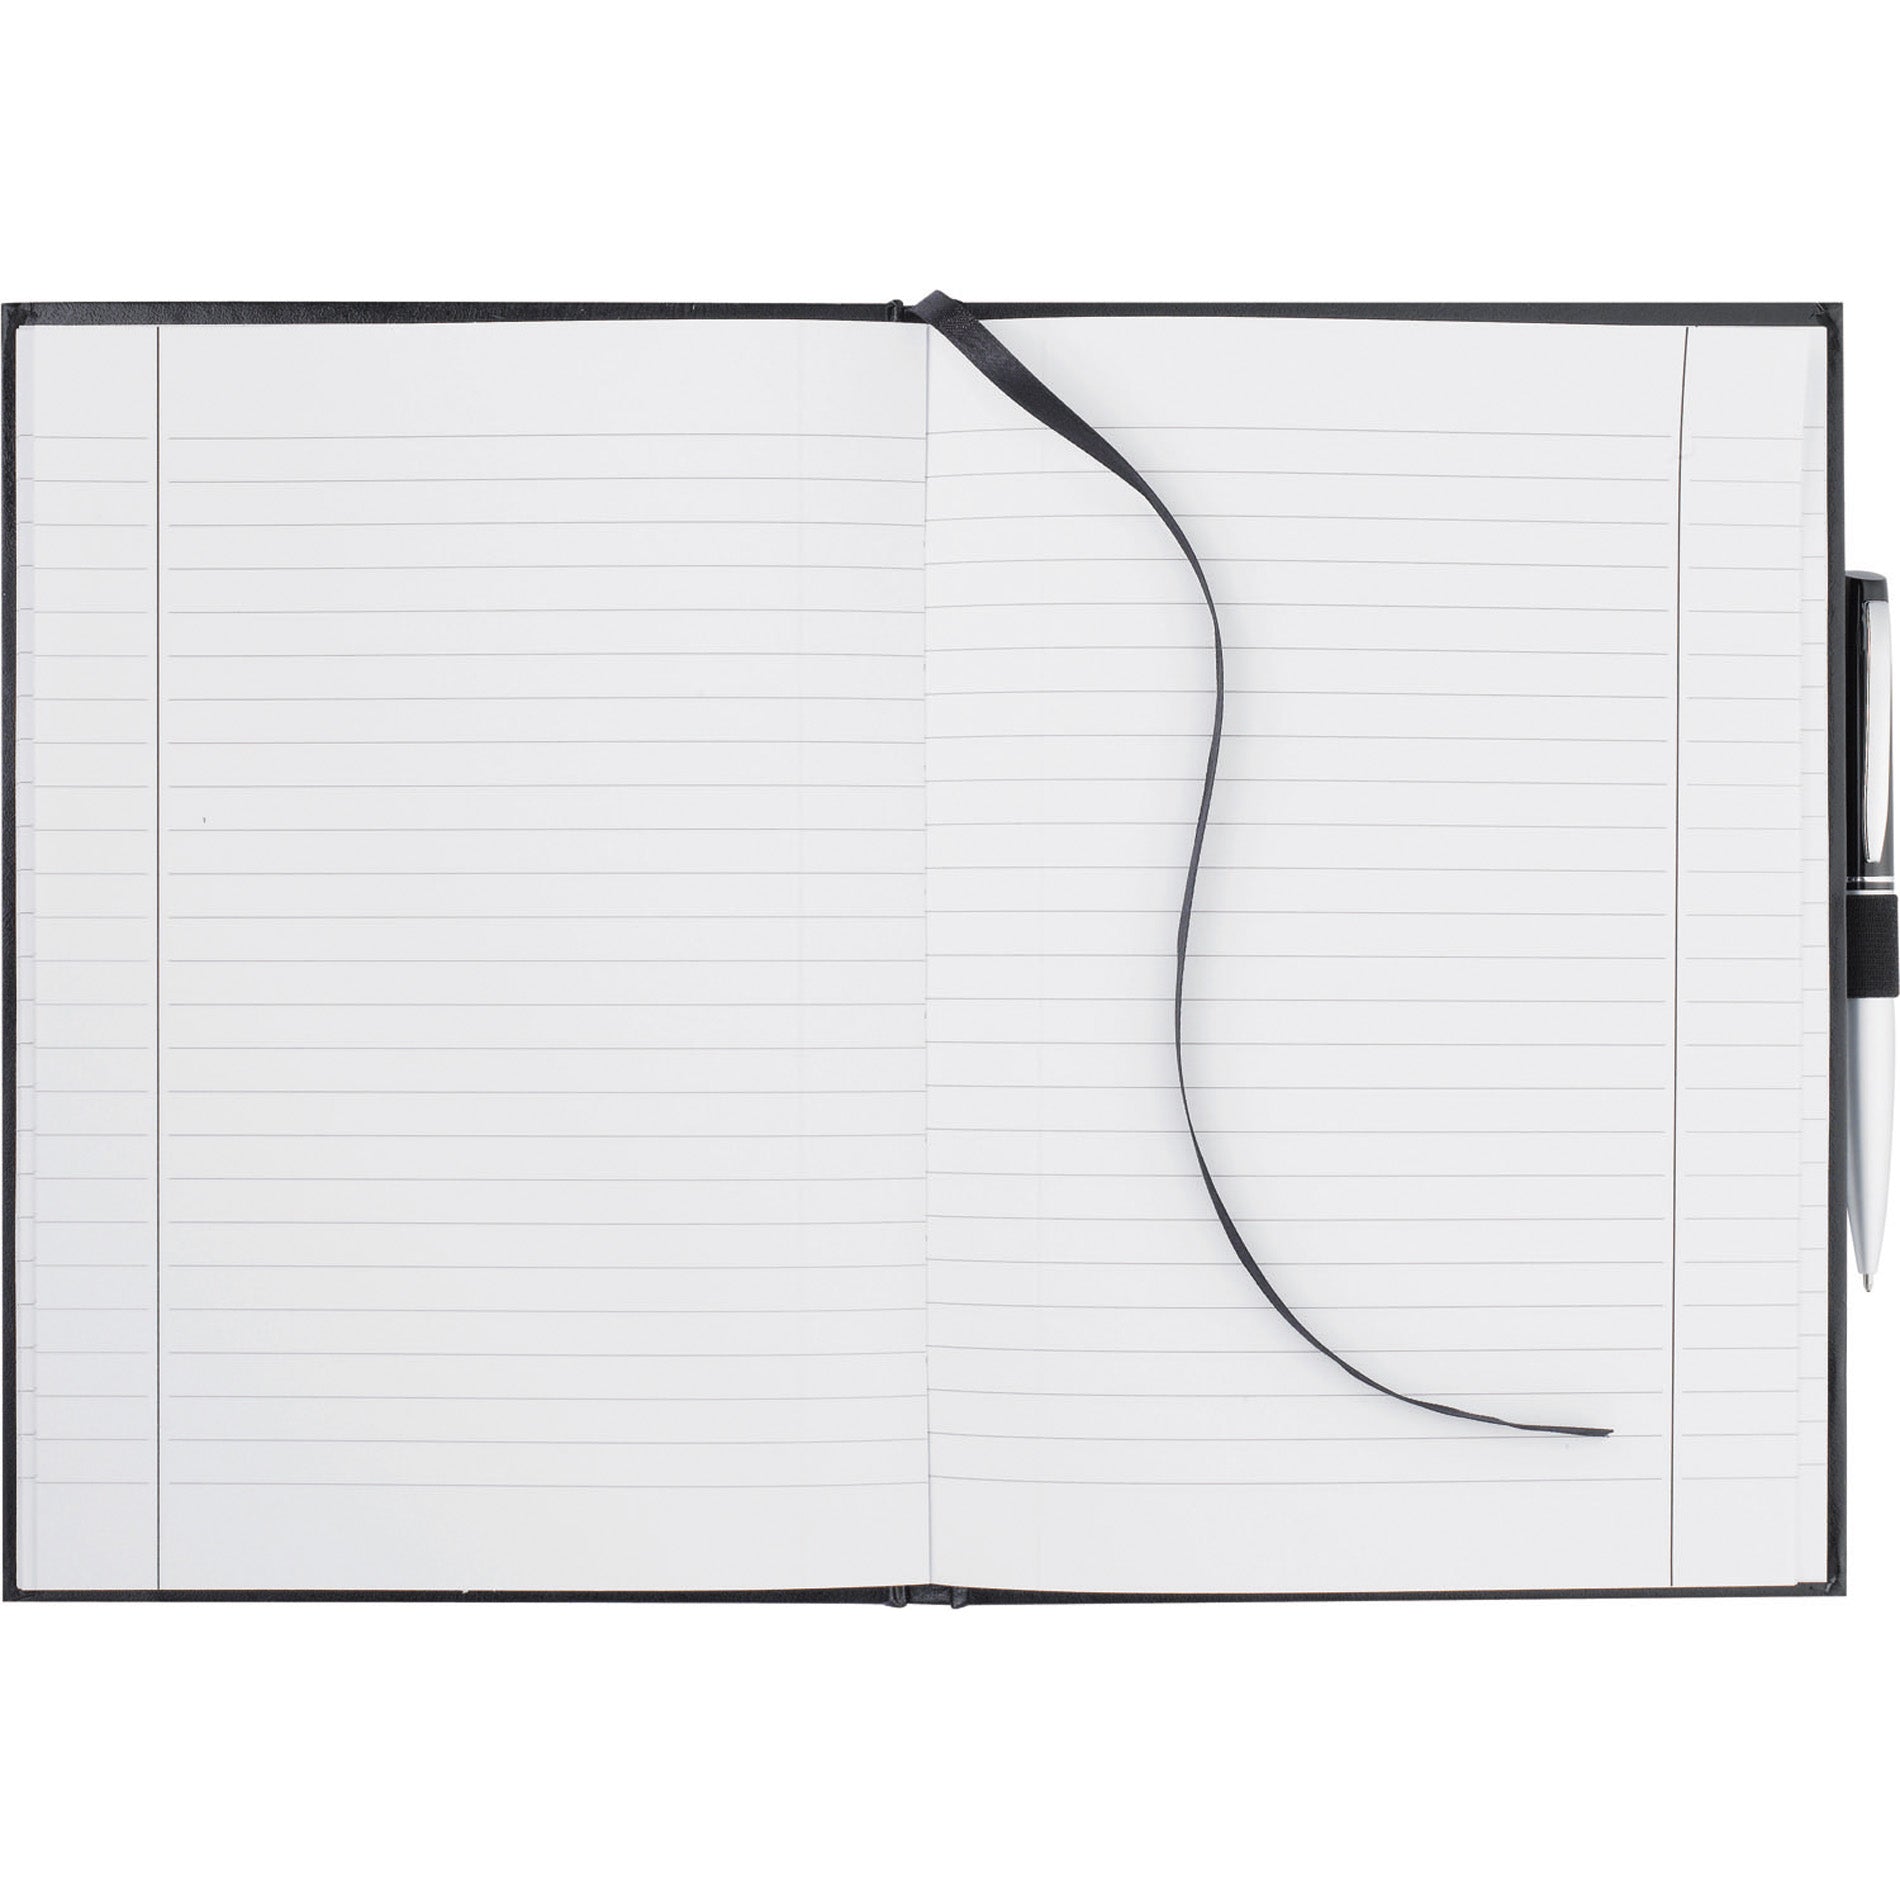 Executive Large Bound JournalBook 2700 Black